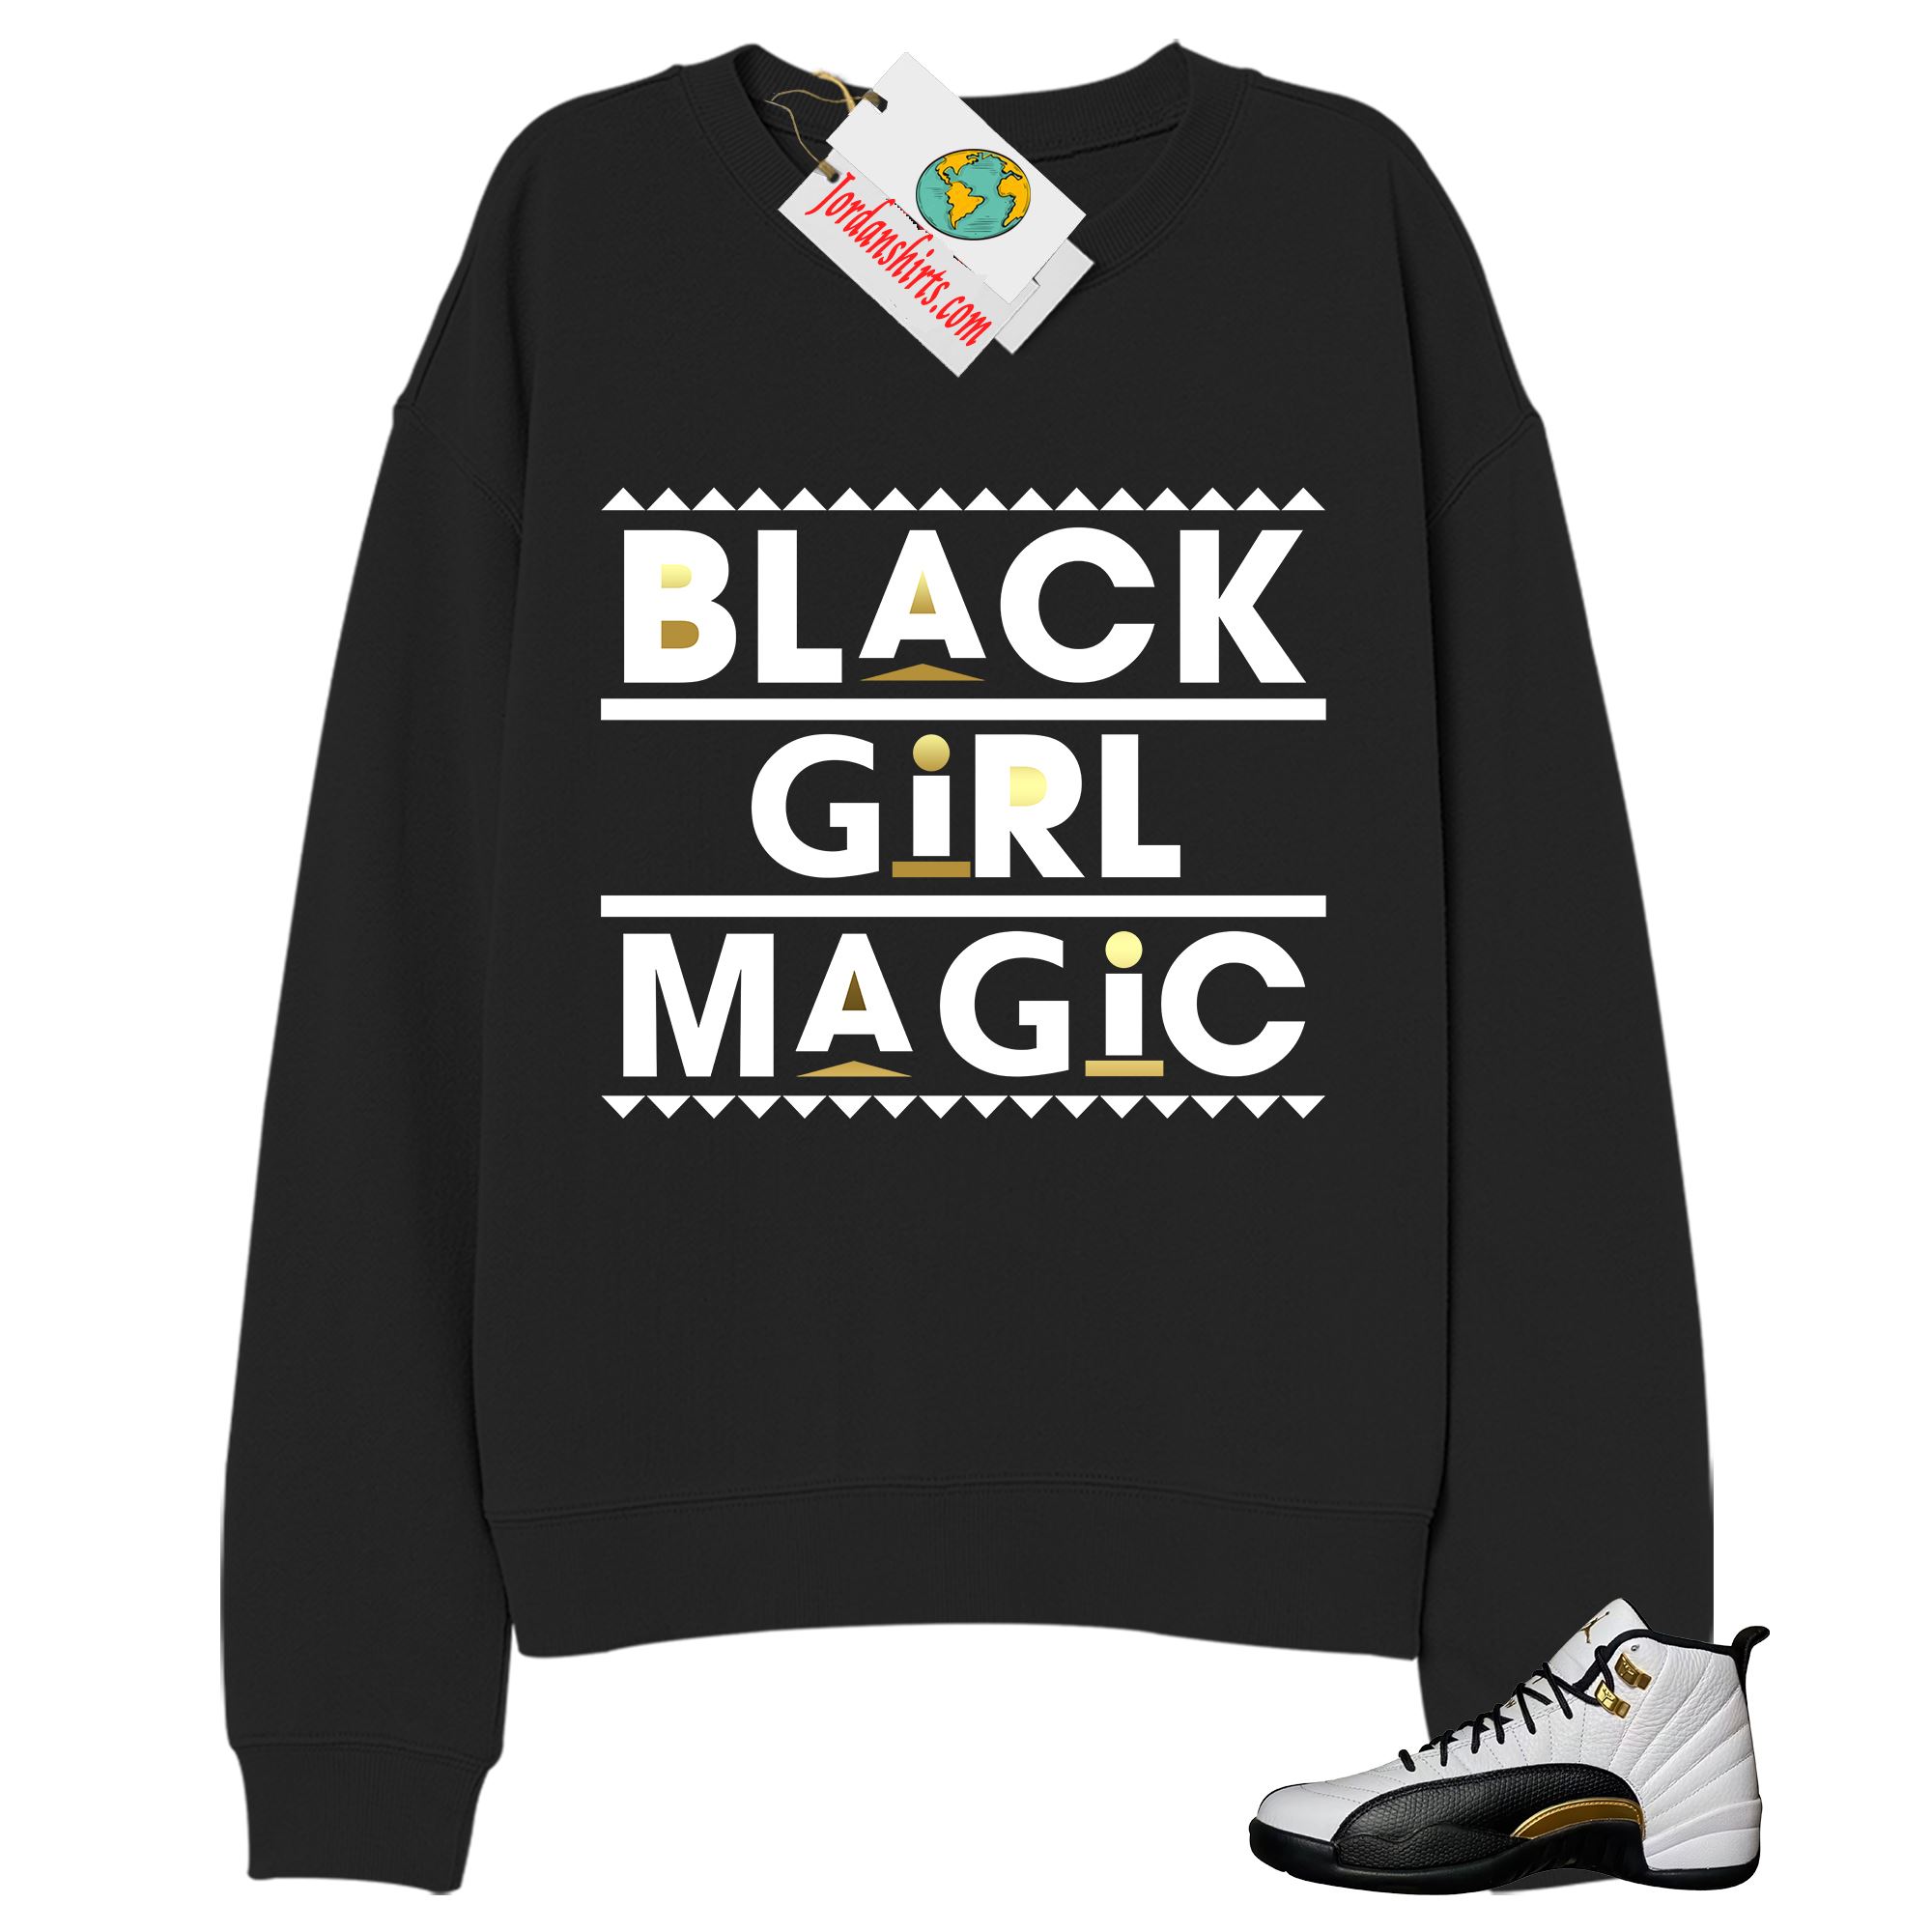 Jordan 12 Sweatshirt, Black Girl Magic Black Sweatshirt Air Jordan 12 Royalty 12s Full Size Up To 5xl